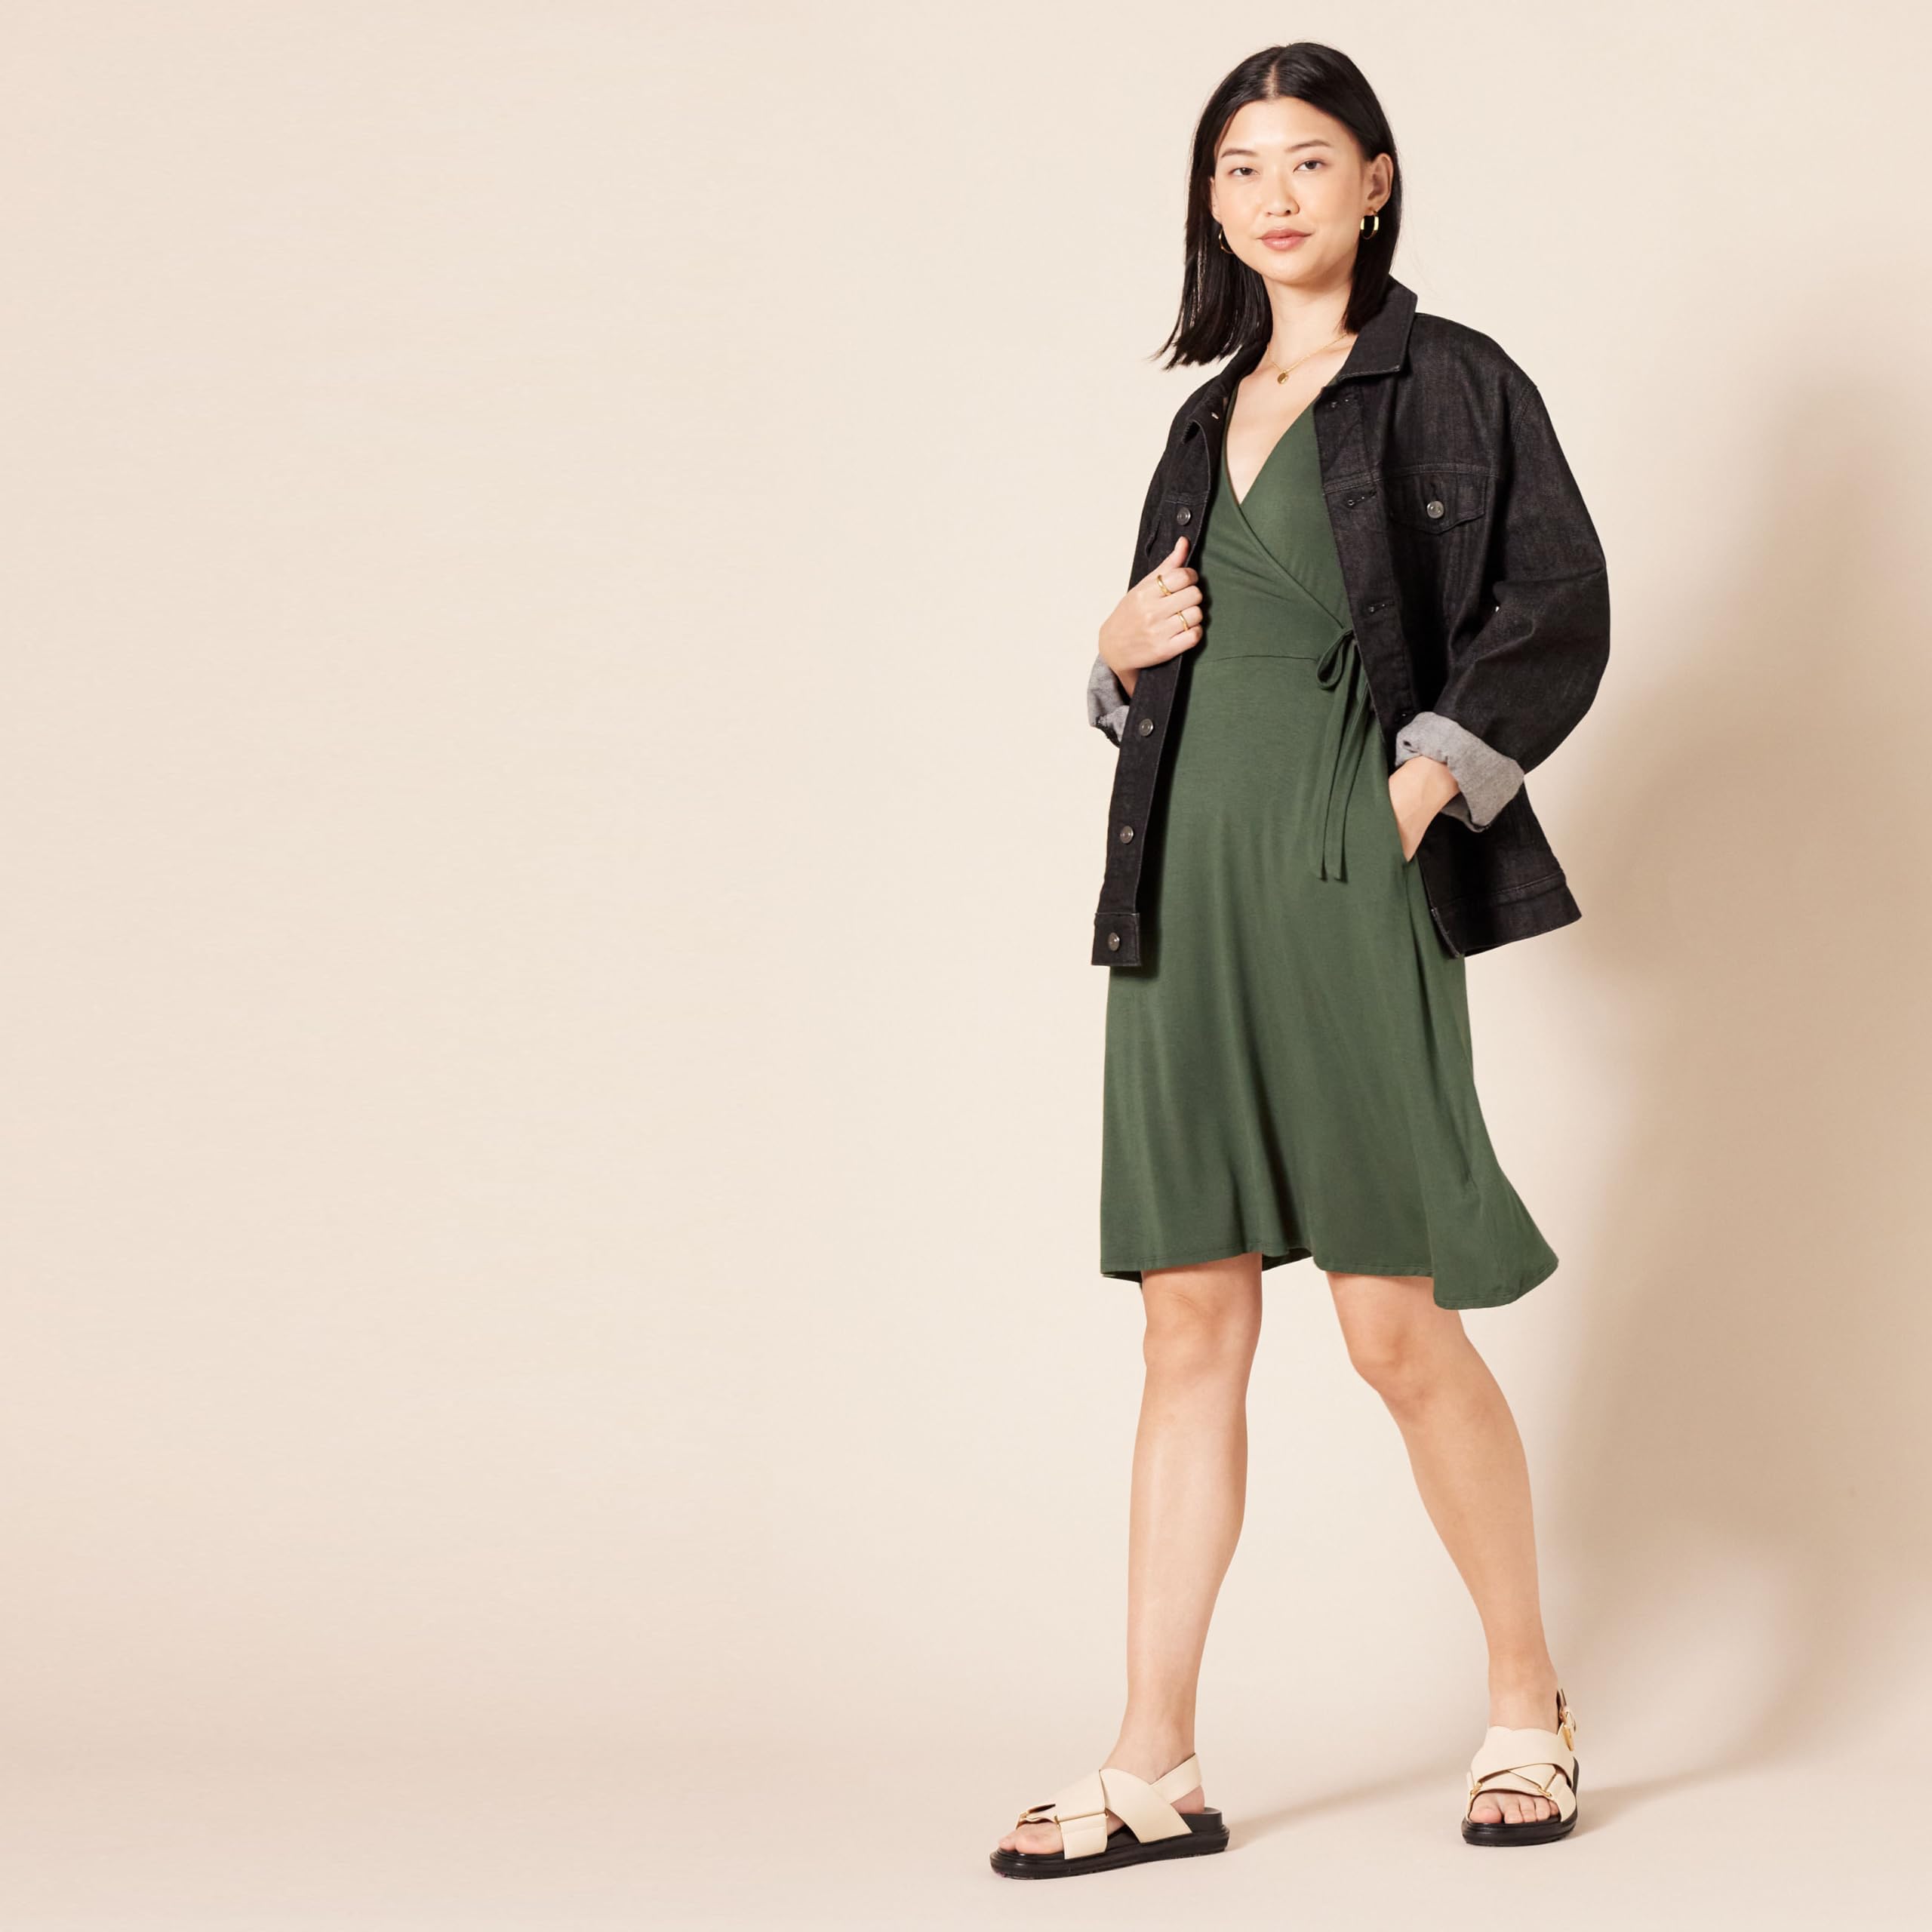 Amazon Essentials Women's Short Sleeve Faux-Wrap Dress